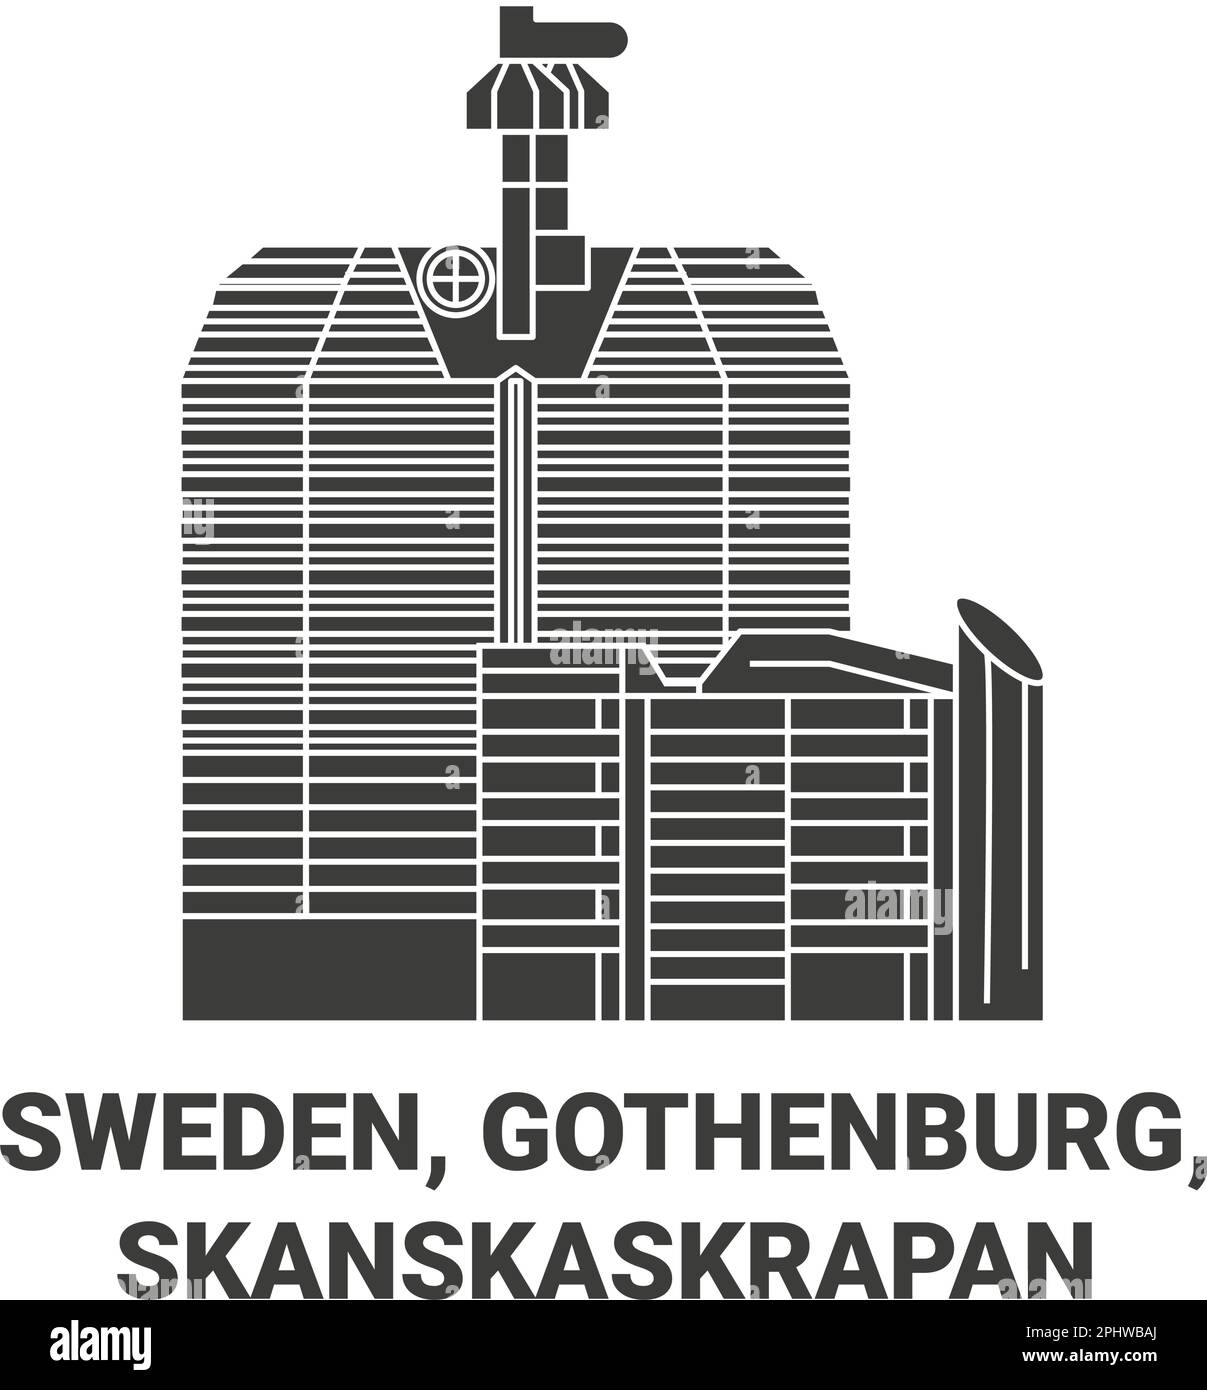 Suède, Göteborg, Skanskrapane voyage illustration du vecteur de repère Illustration de Vecteur